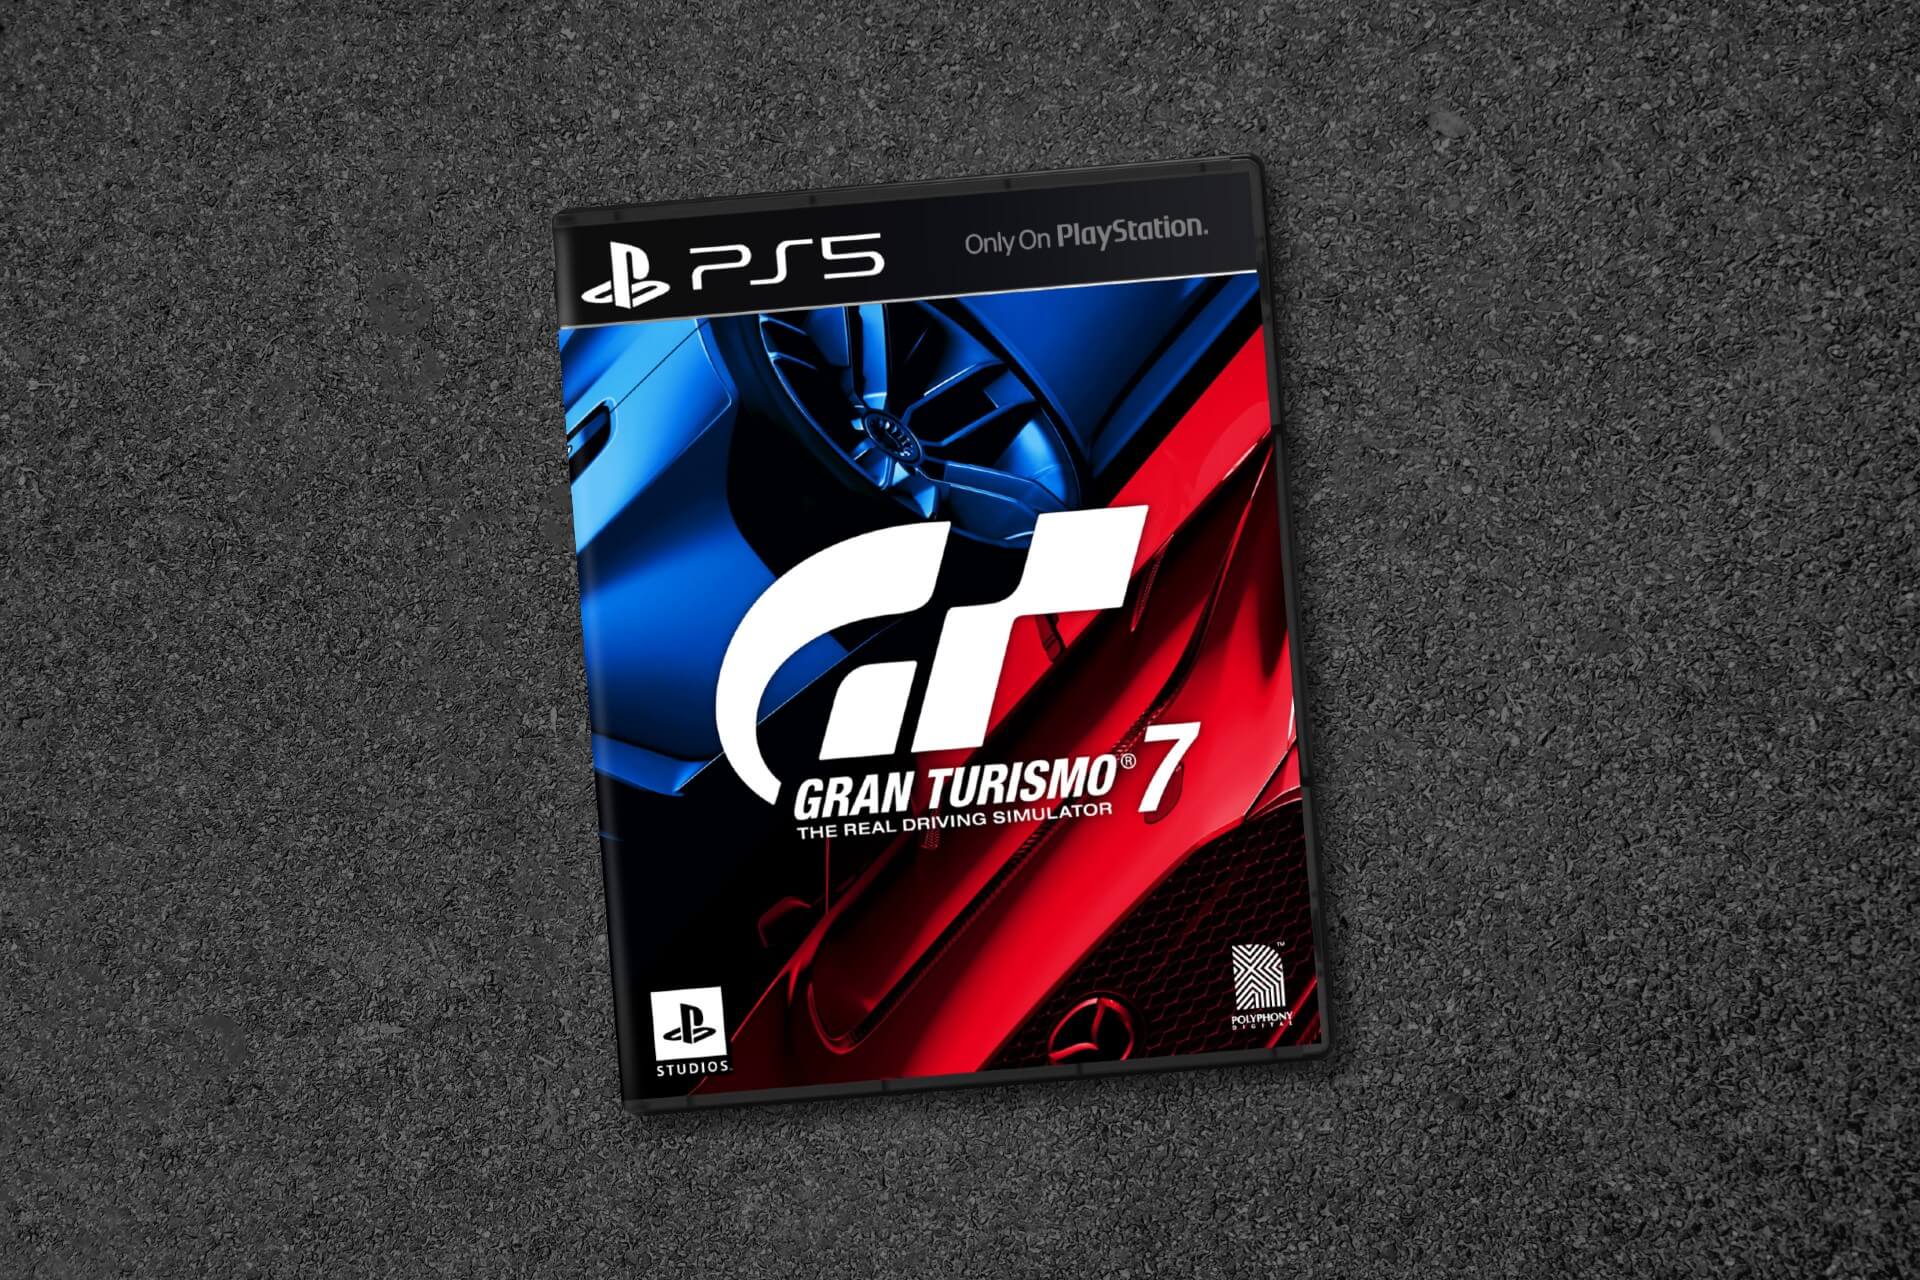 Gran Turismo 7 will be more like classic GT titles, says Kazunori Yamauchi